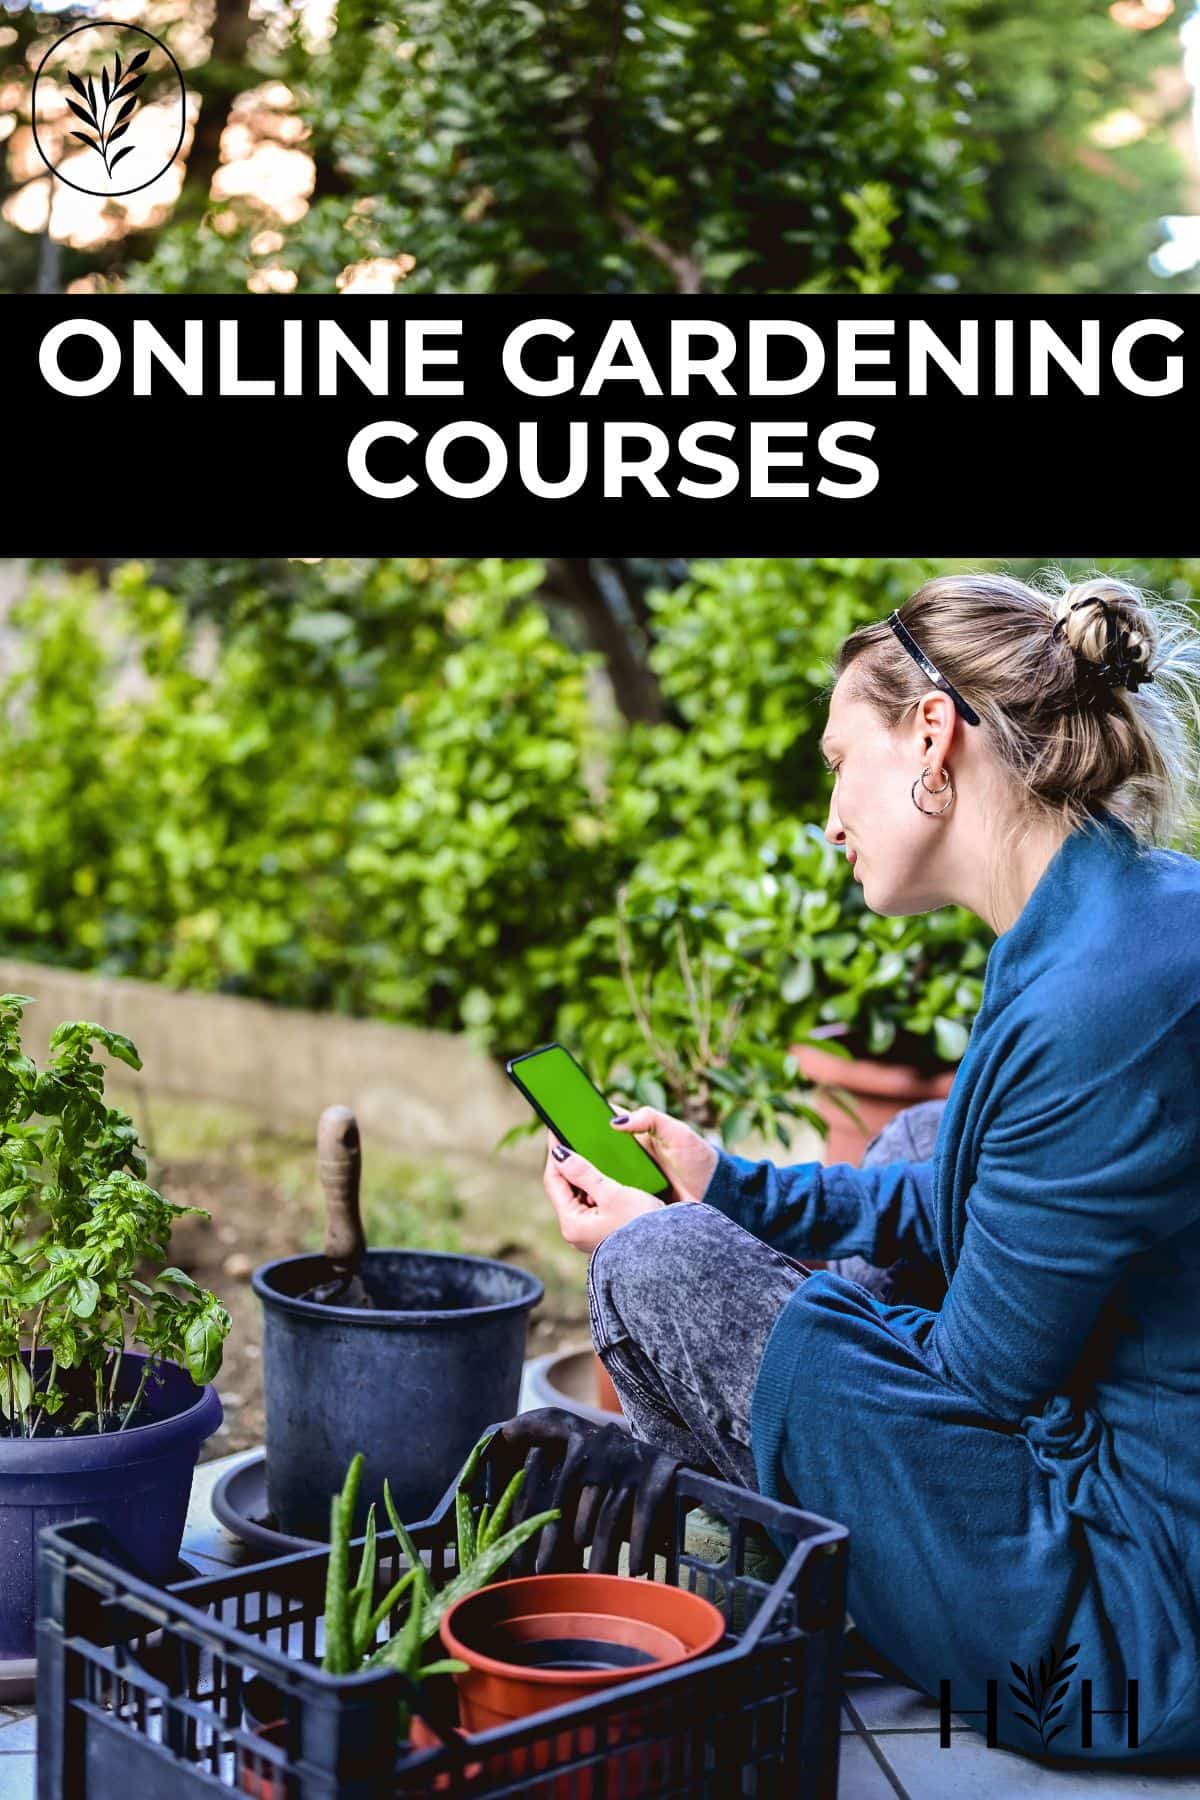 Online gardening courses via @home4theharvest